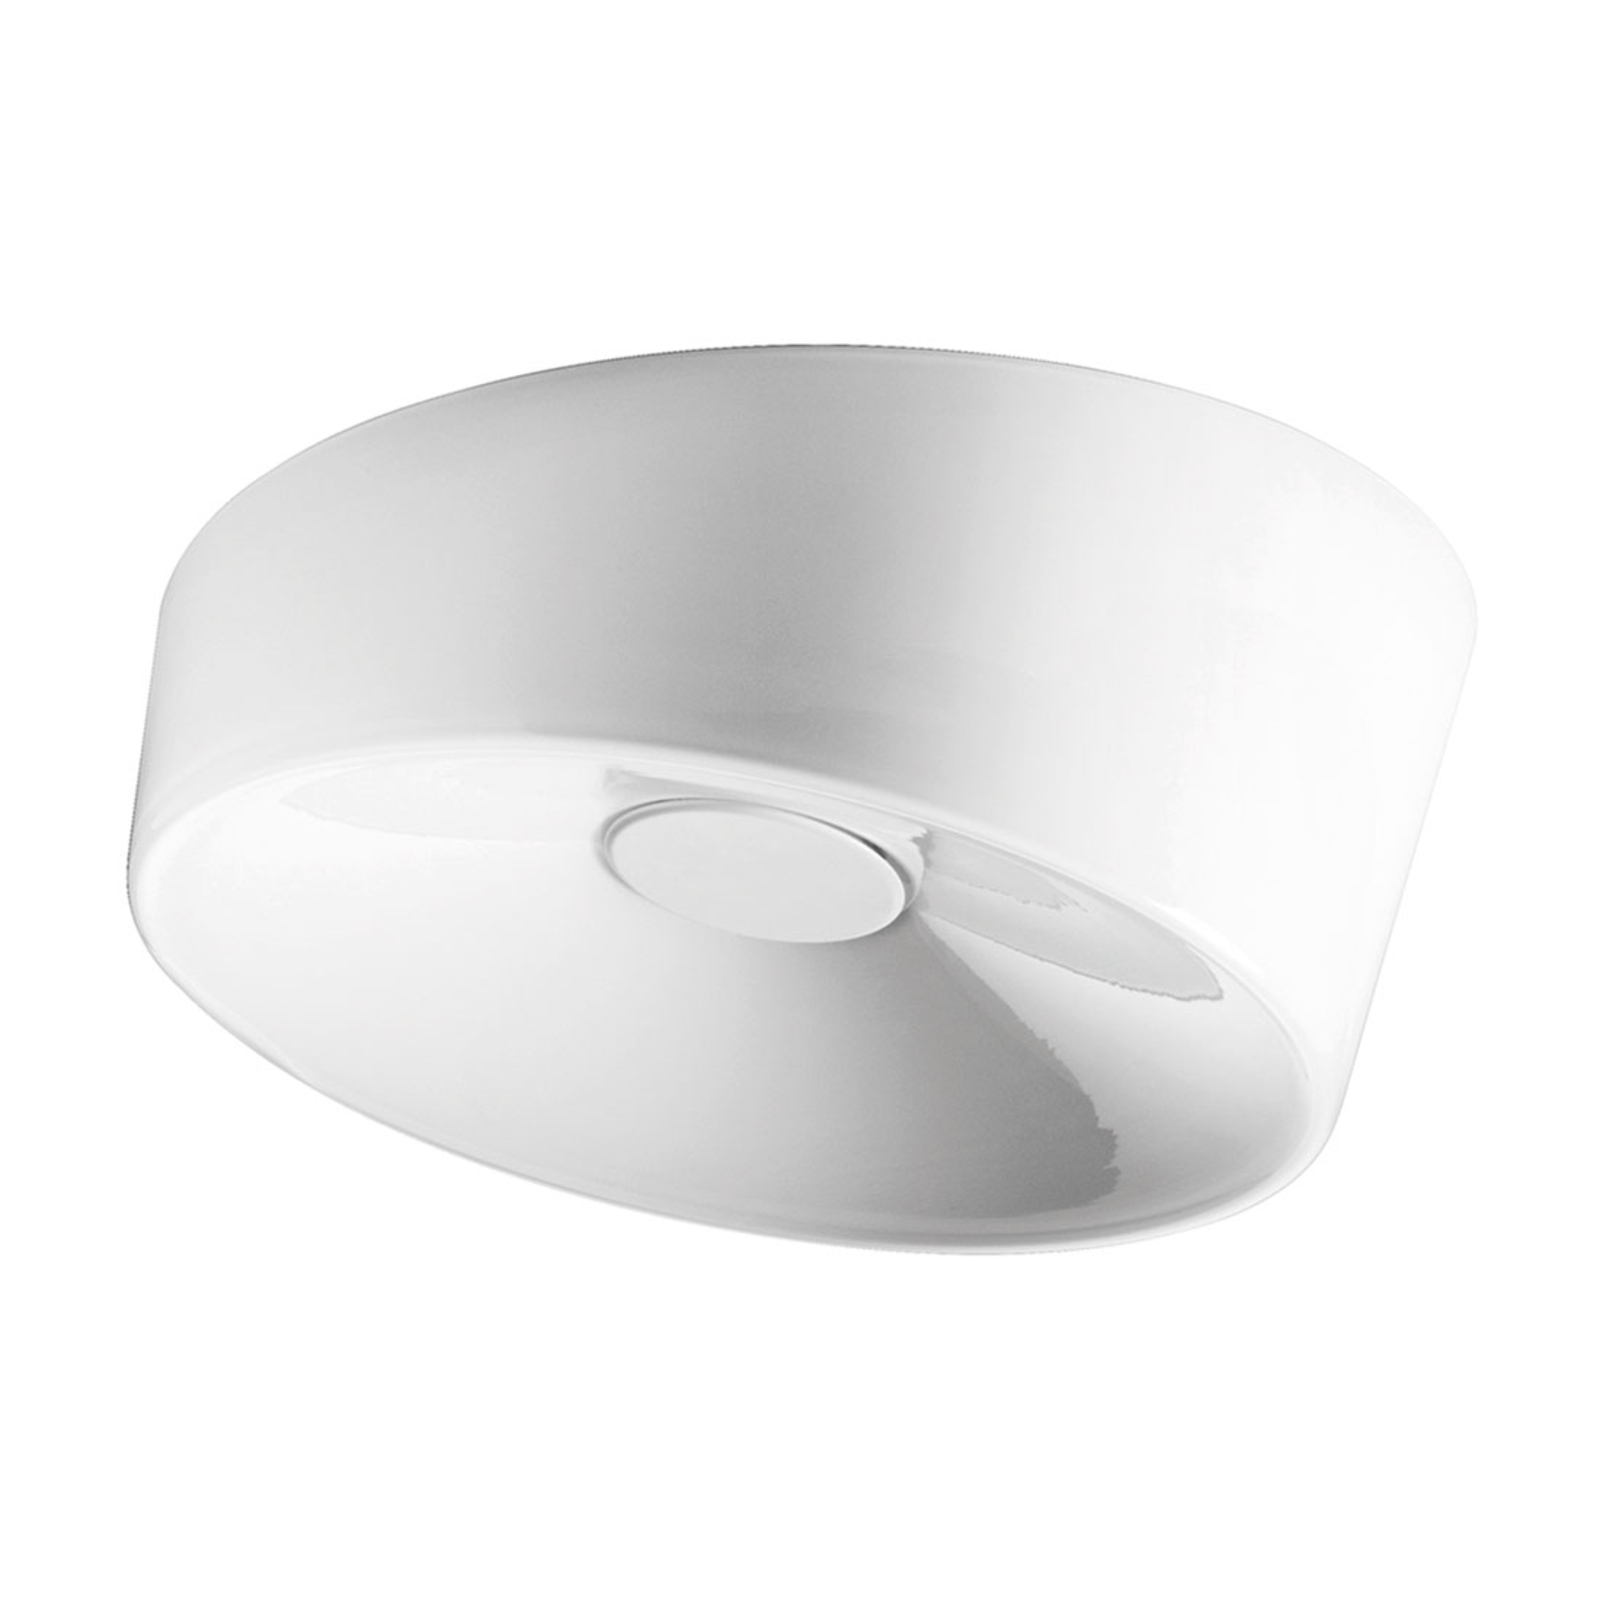 Foscarini Lumiere G9 plafondlamp, Ø 34 cm, wit